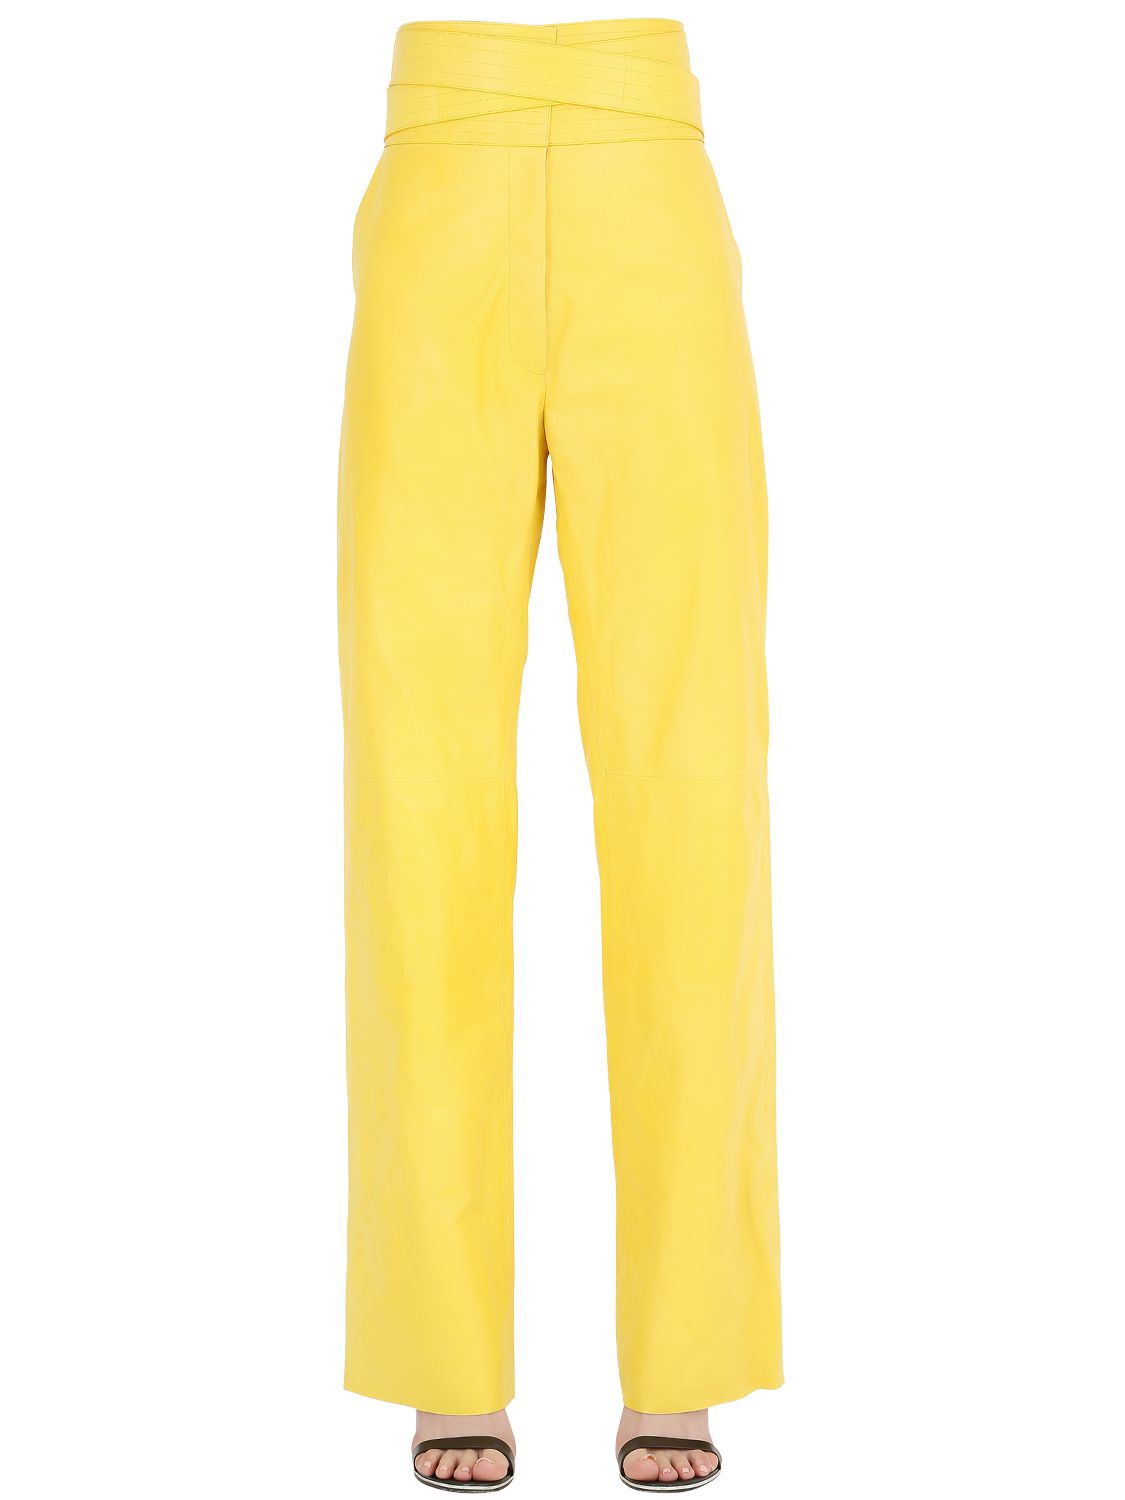 Loewe Nappa Leather Pants in Yellow - Save 50% | Lyst